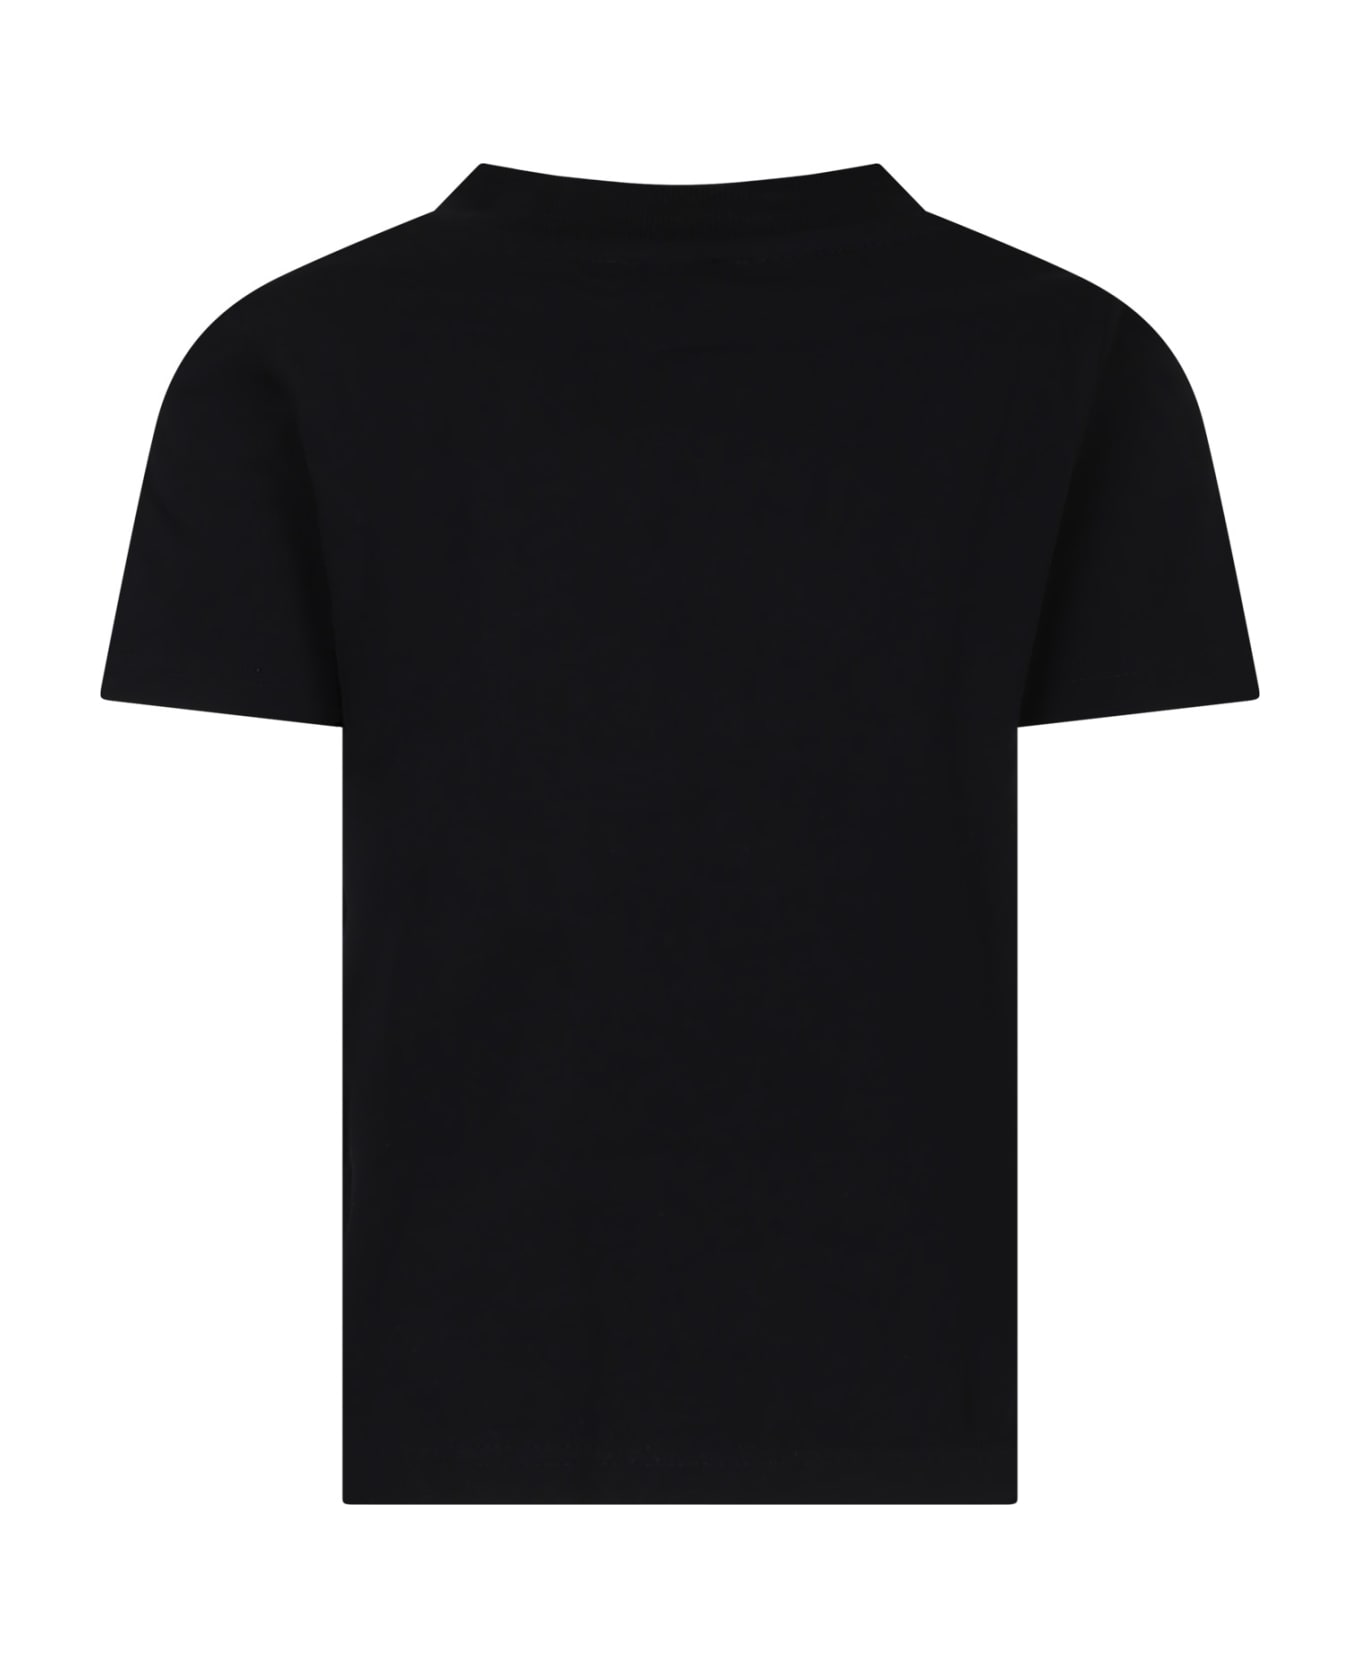 Givenchy Black T-shirt For Boy With Denim Logo - Black